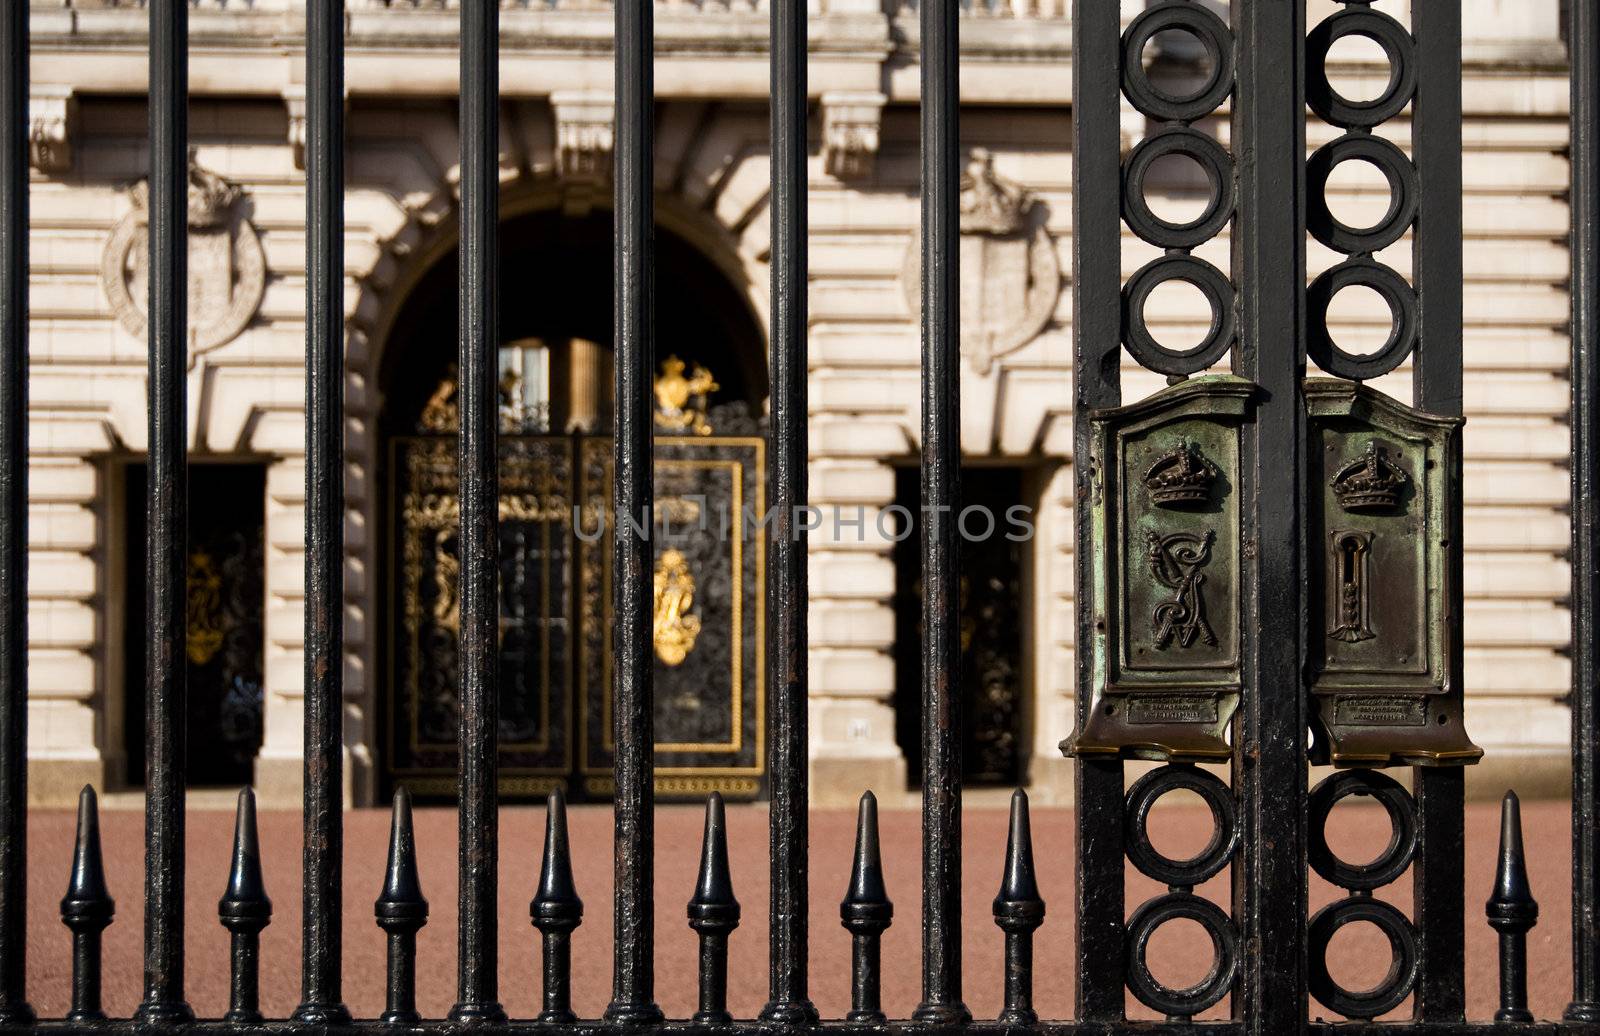 Buckingham Palace by dutourdumonde